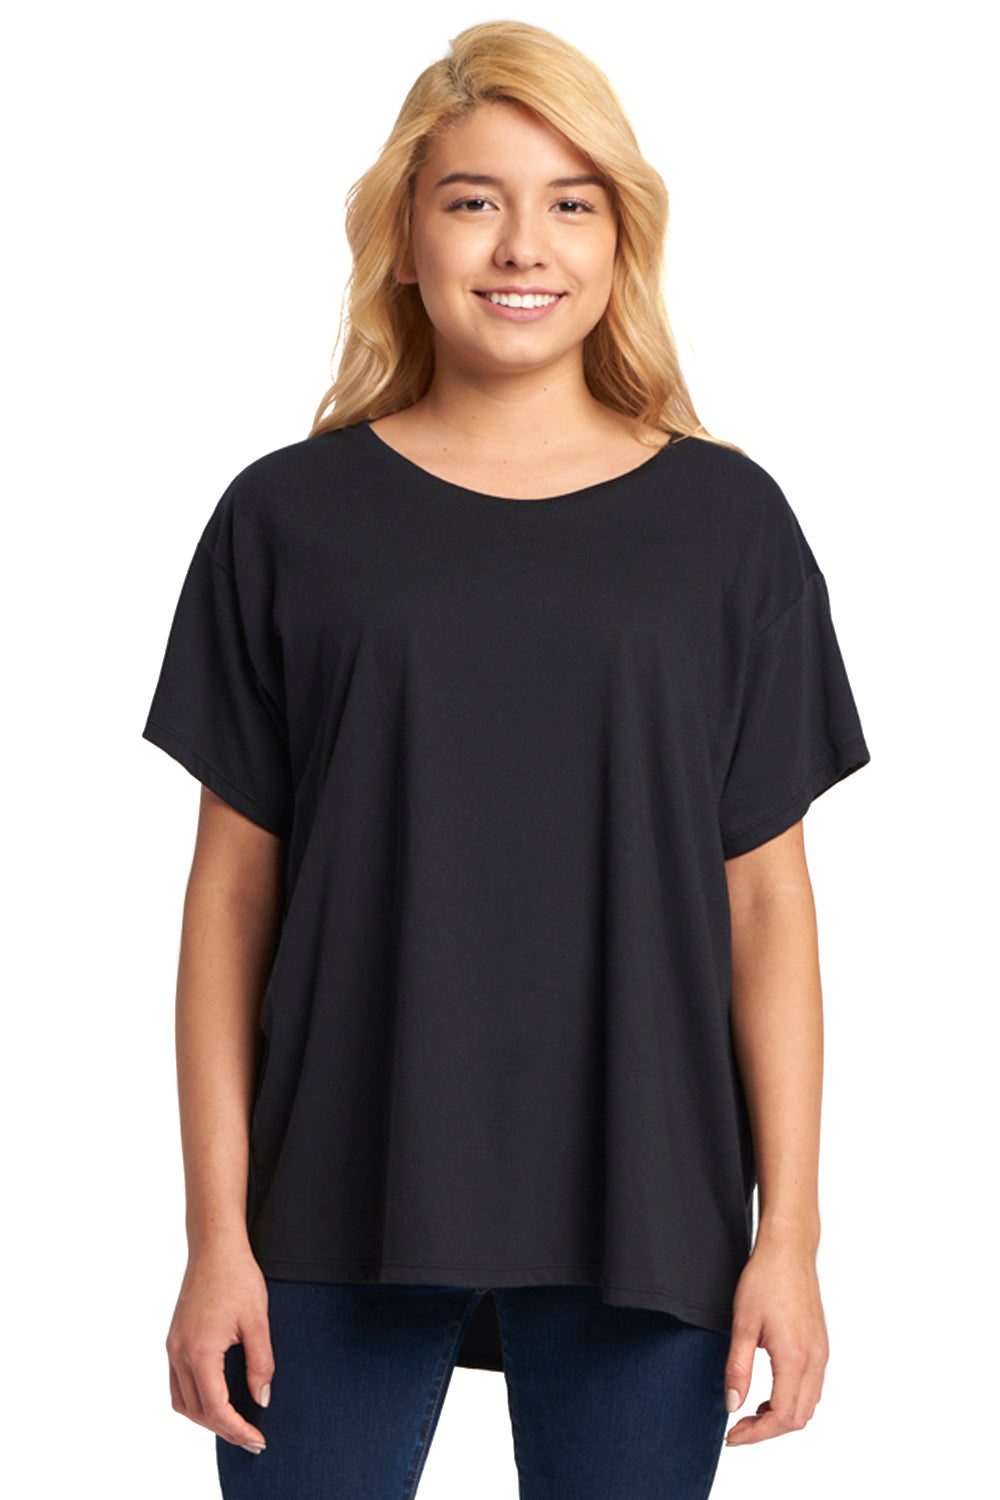 Next Level N1530 Womens Ideal Flow Short Sleeve Crewneck T-Shirt Black Front